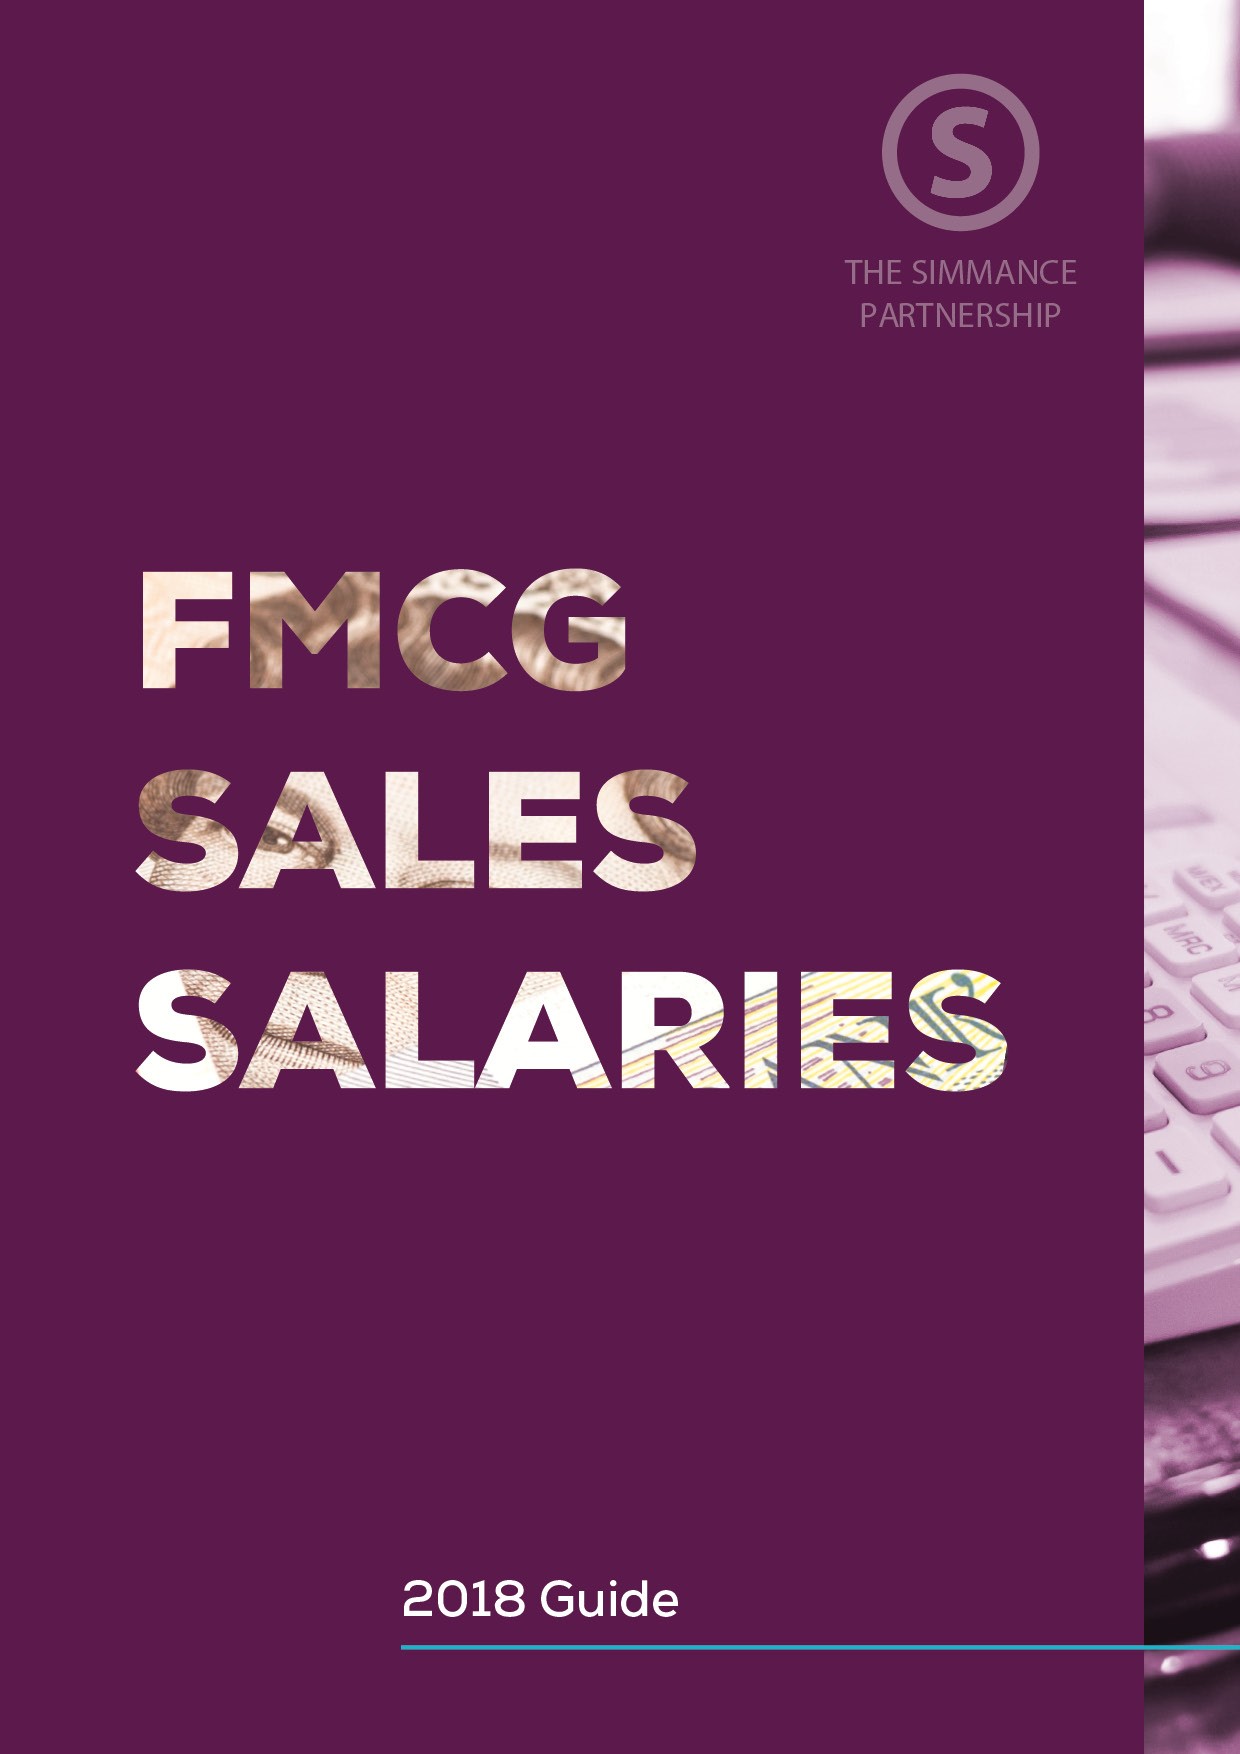 FMCG sales salaries shot.jpg